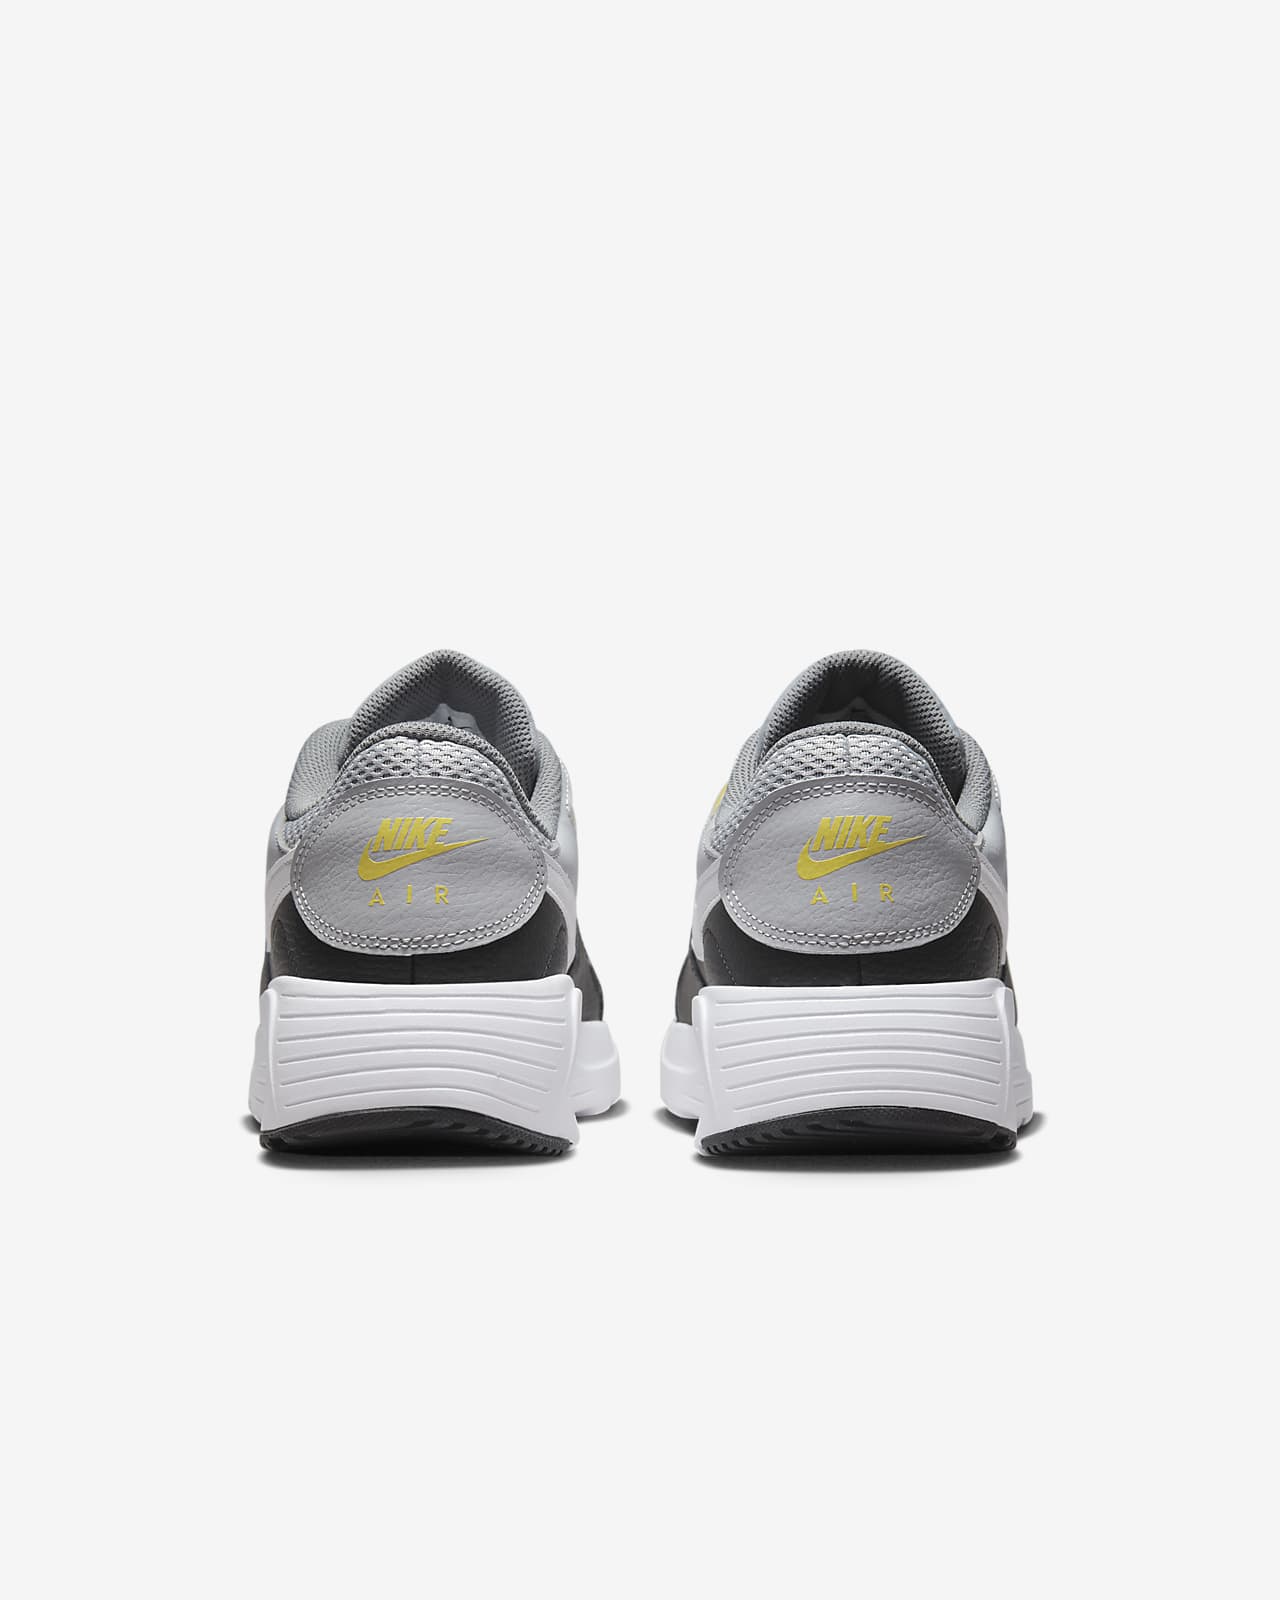 Chaussure Nike Air Max SC pour homme